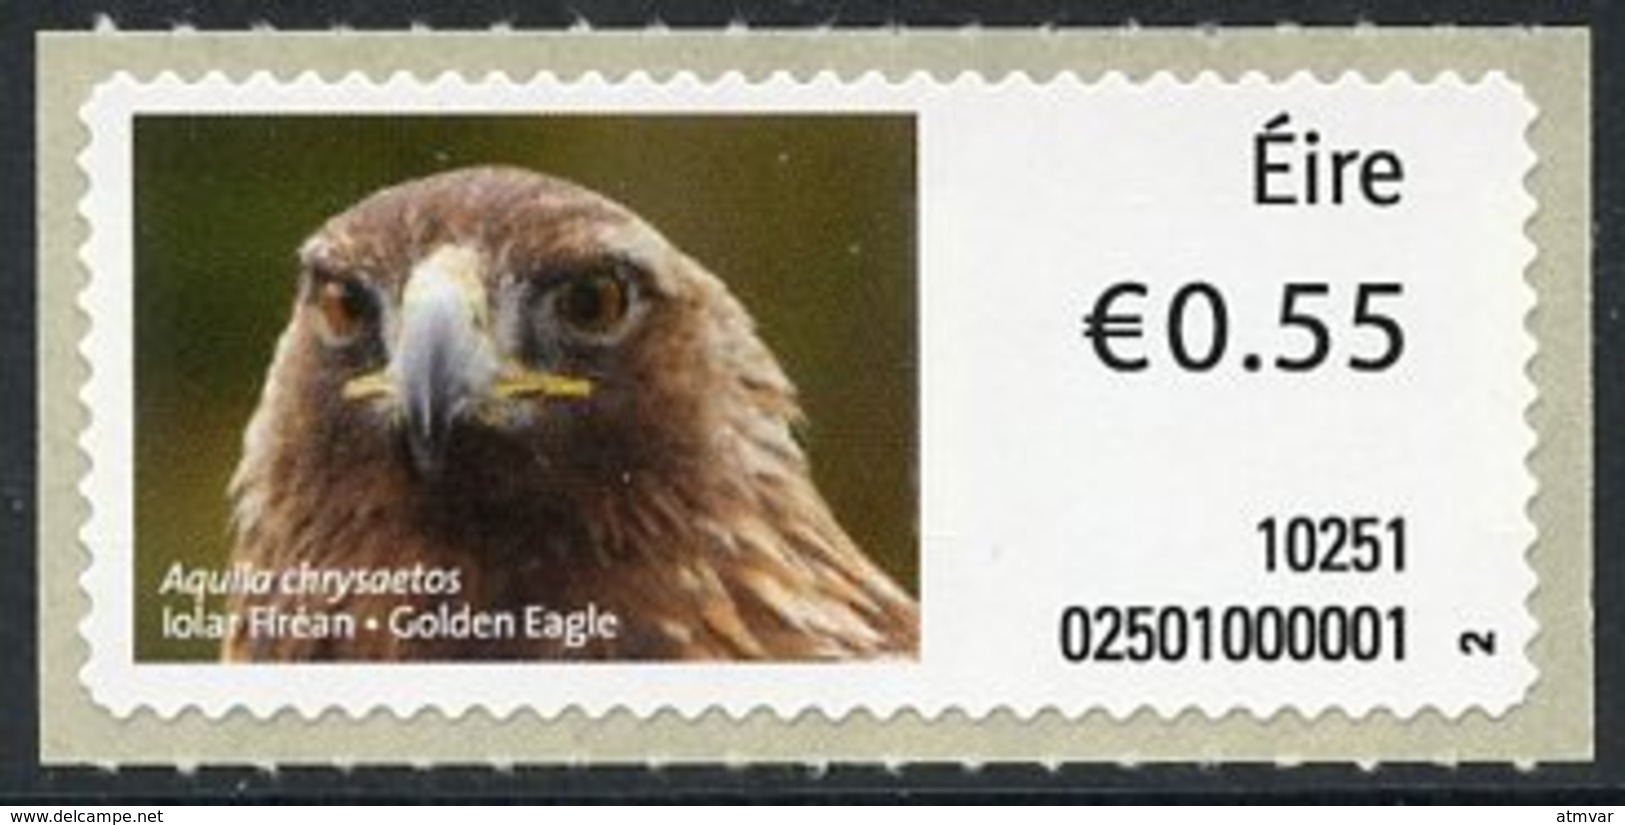 IRELAND (2010). SOAR - ATM - Aquila Chrysaetos, Golden Eagle, águila Real, Steinadler, Iolar Fíréan - Affrancature Meccaniche/Frama